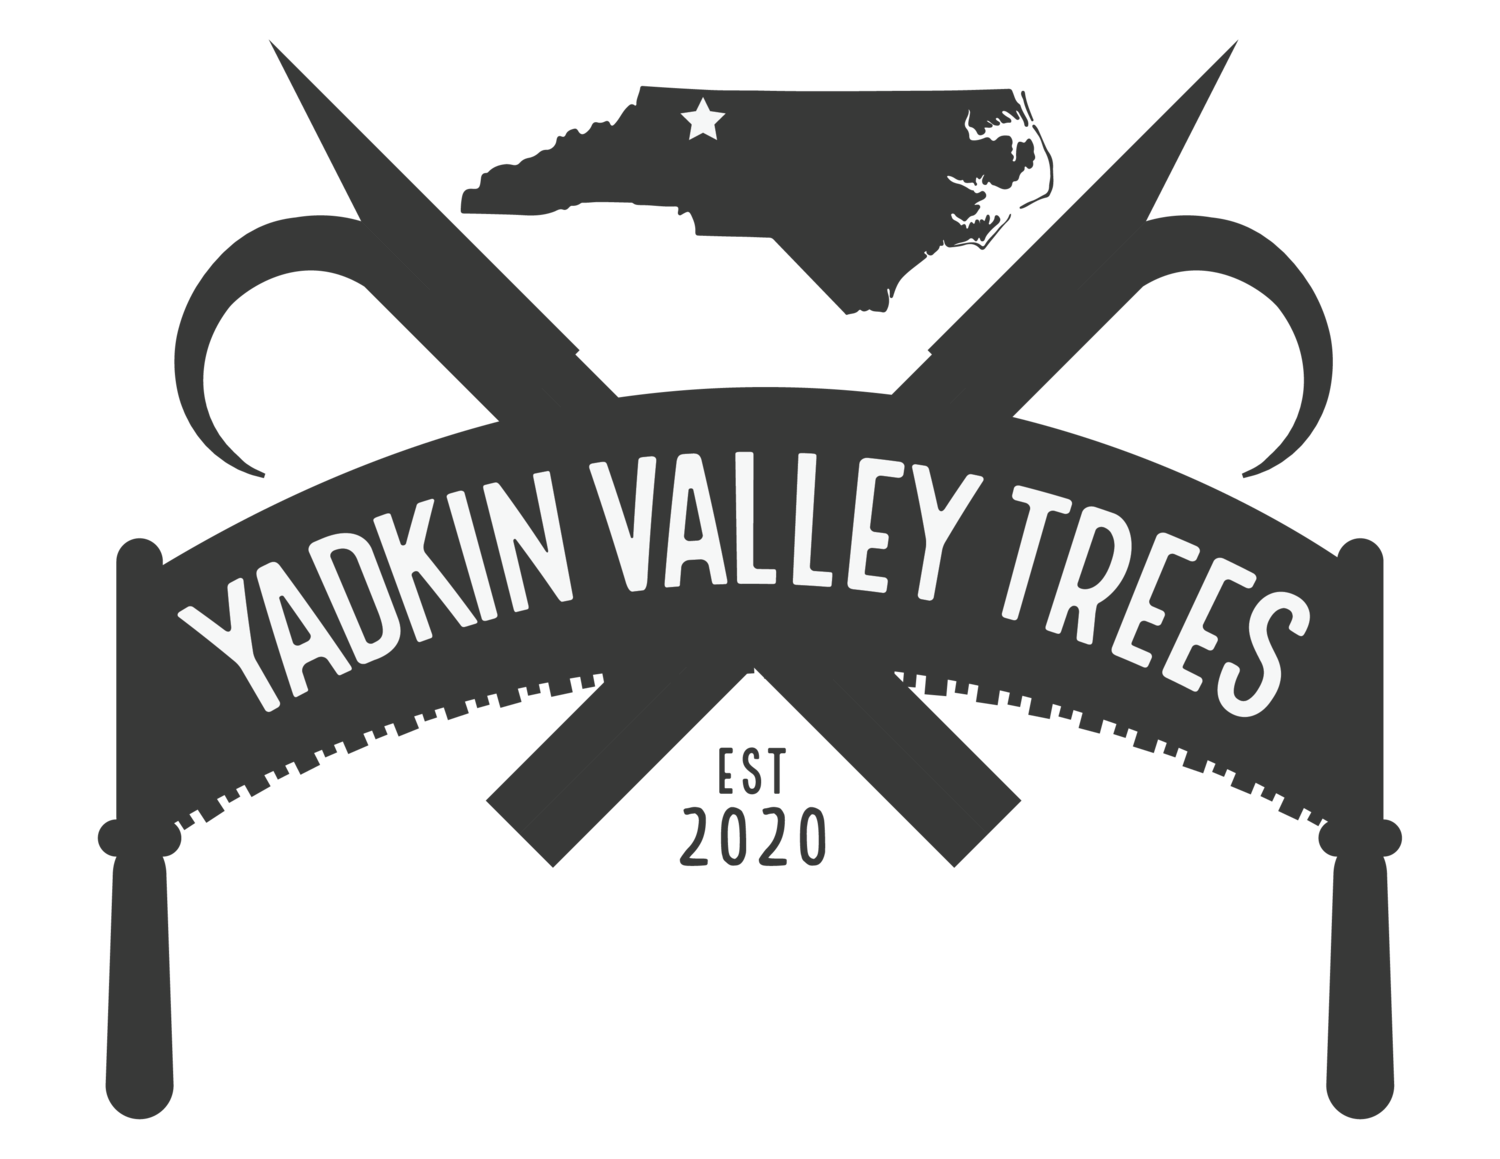 Yadkin Valley Trees